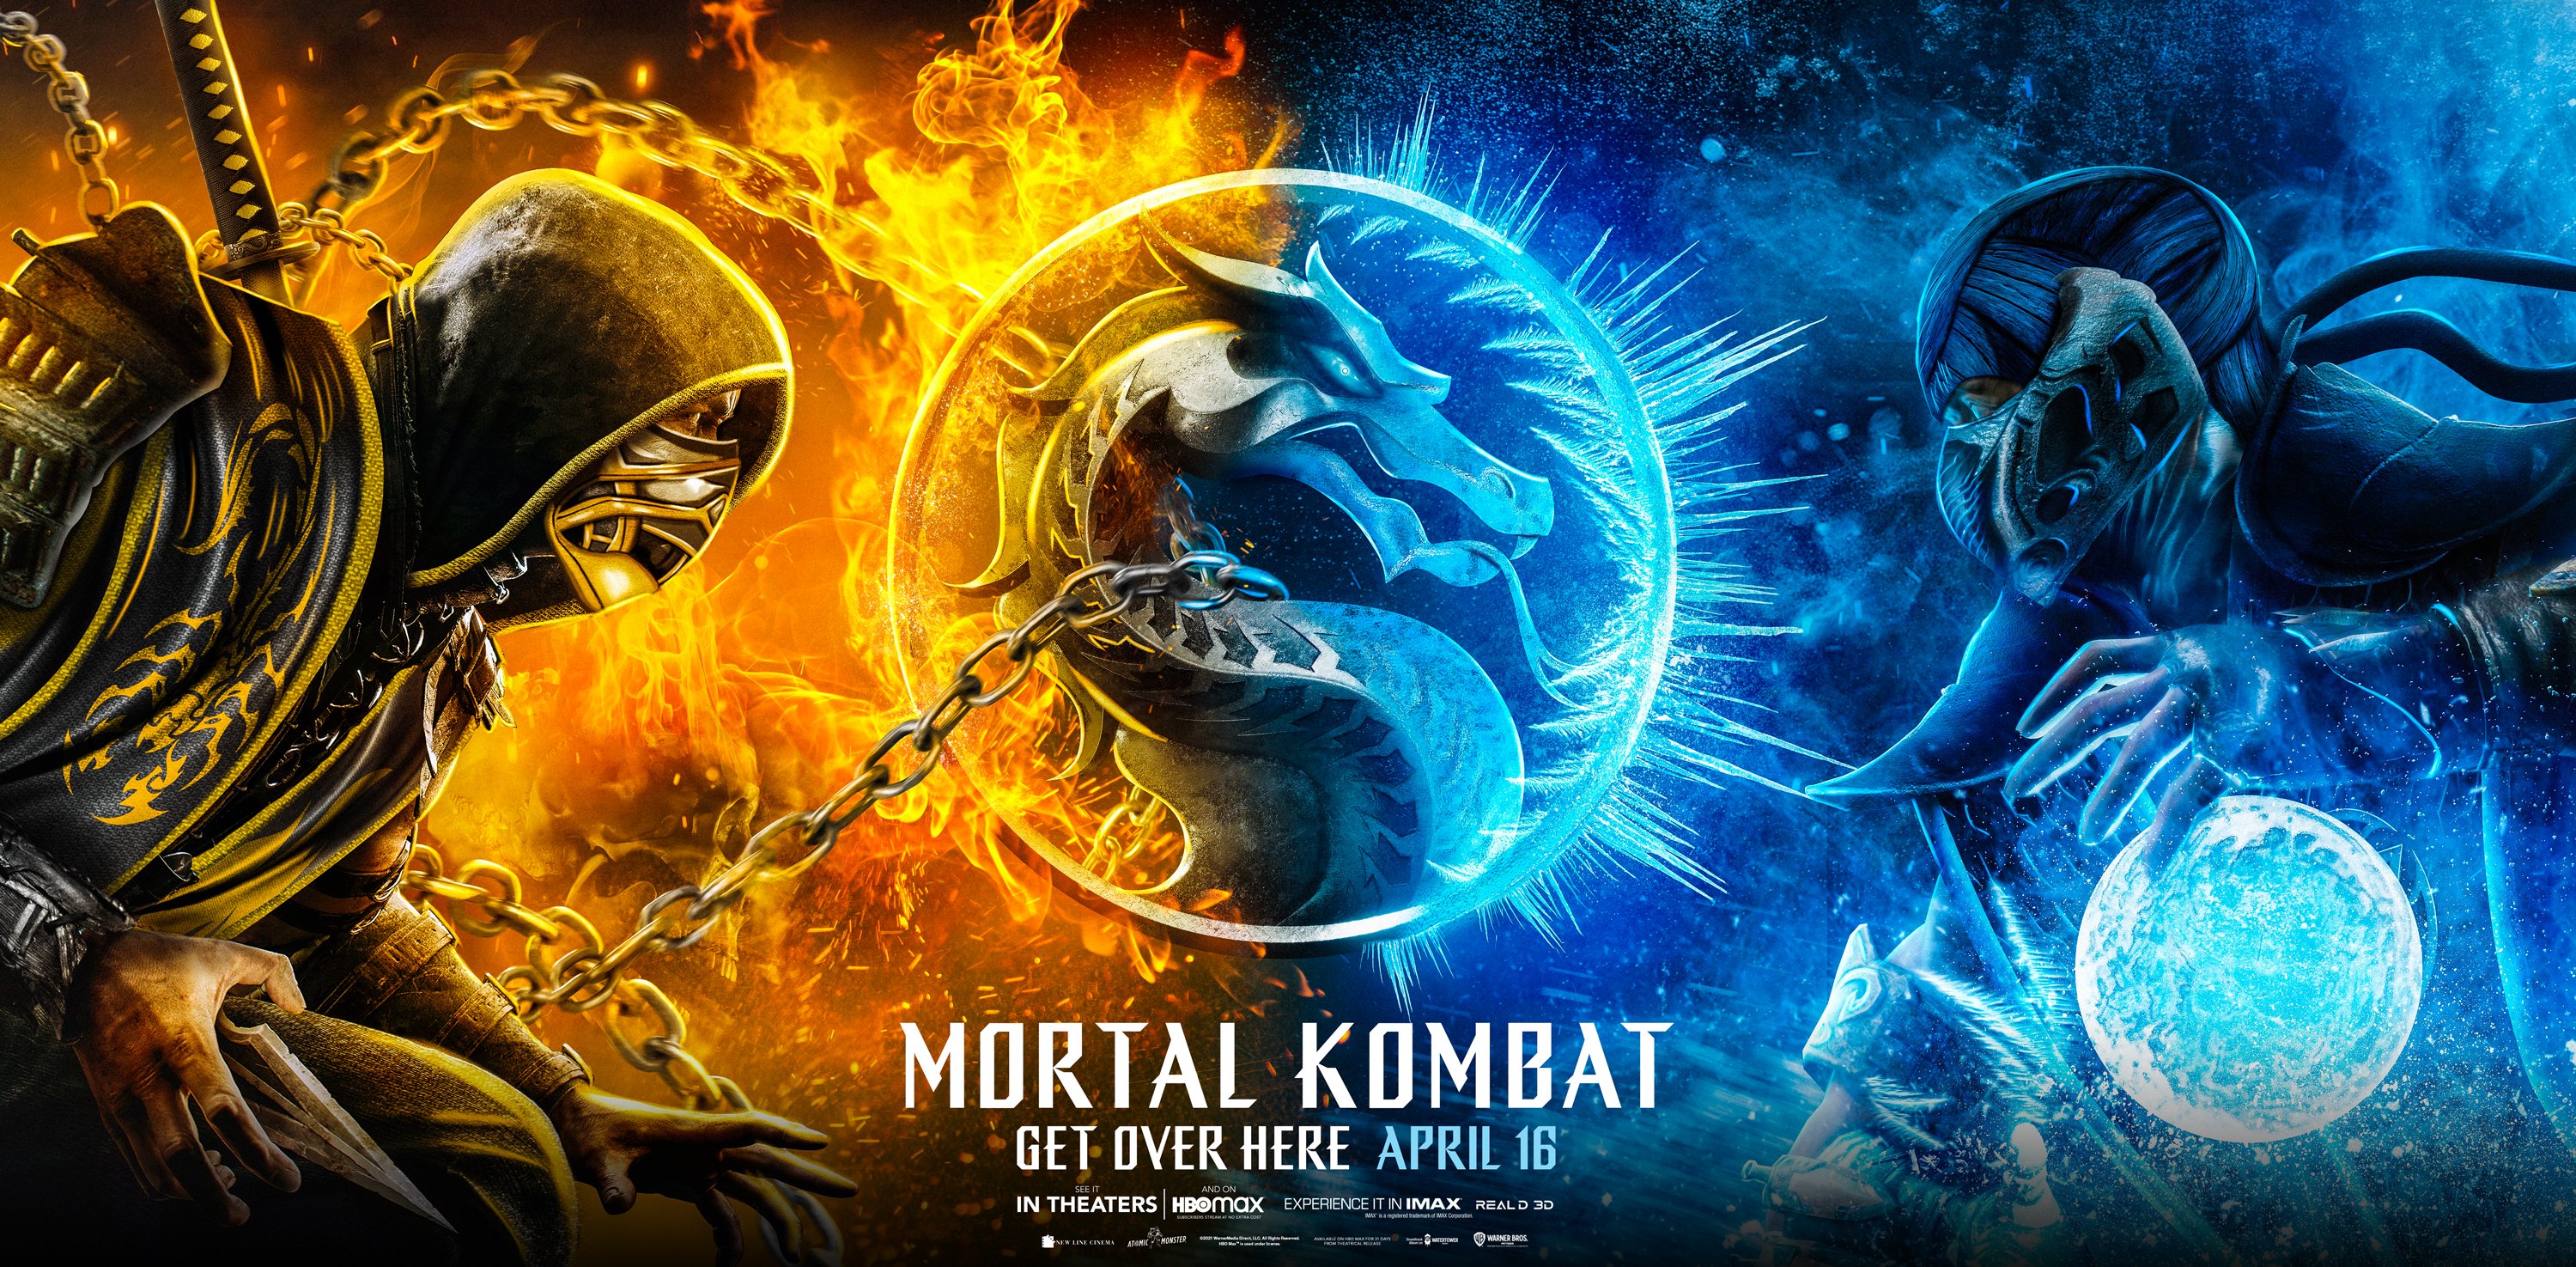 Mortal Kombat 2021 trailer - New MK movie!!!